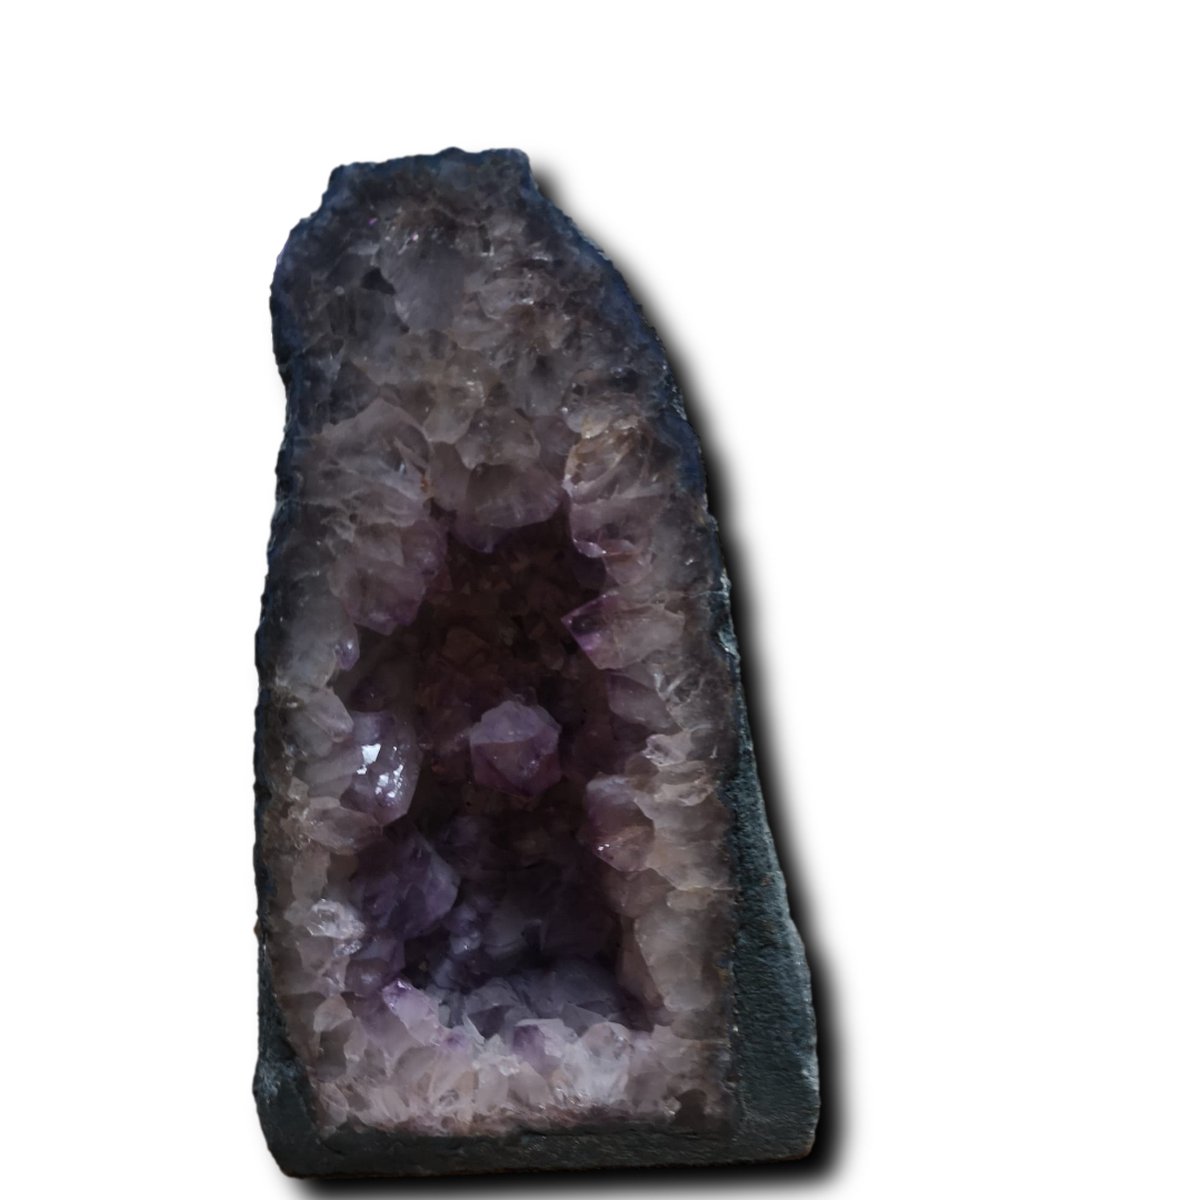 Grote amethist geode 15.9 kilo - Echte amethist - Unieke Amethist - paarse edelsteen - Interieur - Authentiek - spiritueel